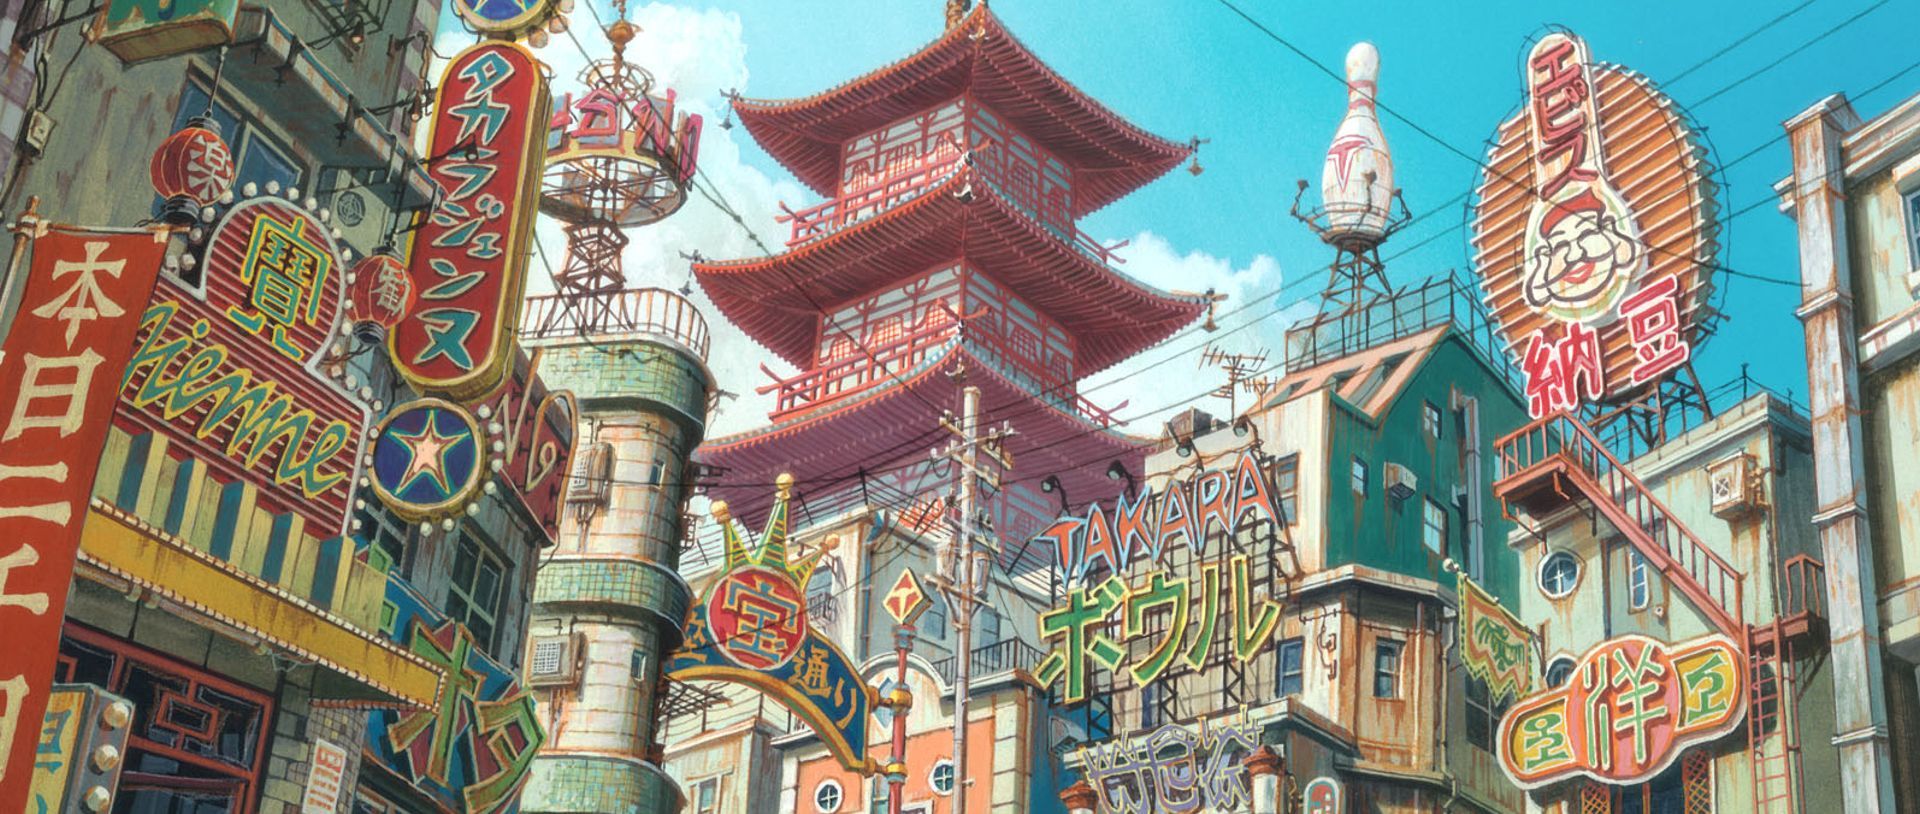 Secret Town  Day Anime background  Illustration  Stock Image   Everypixel